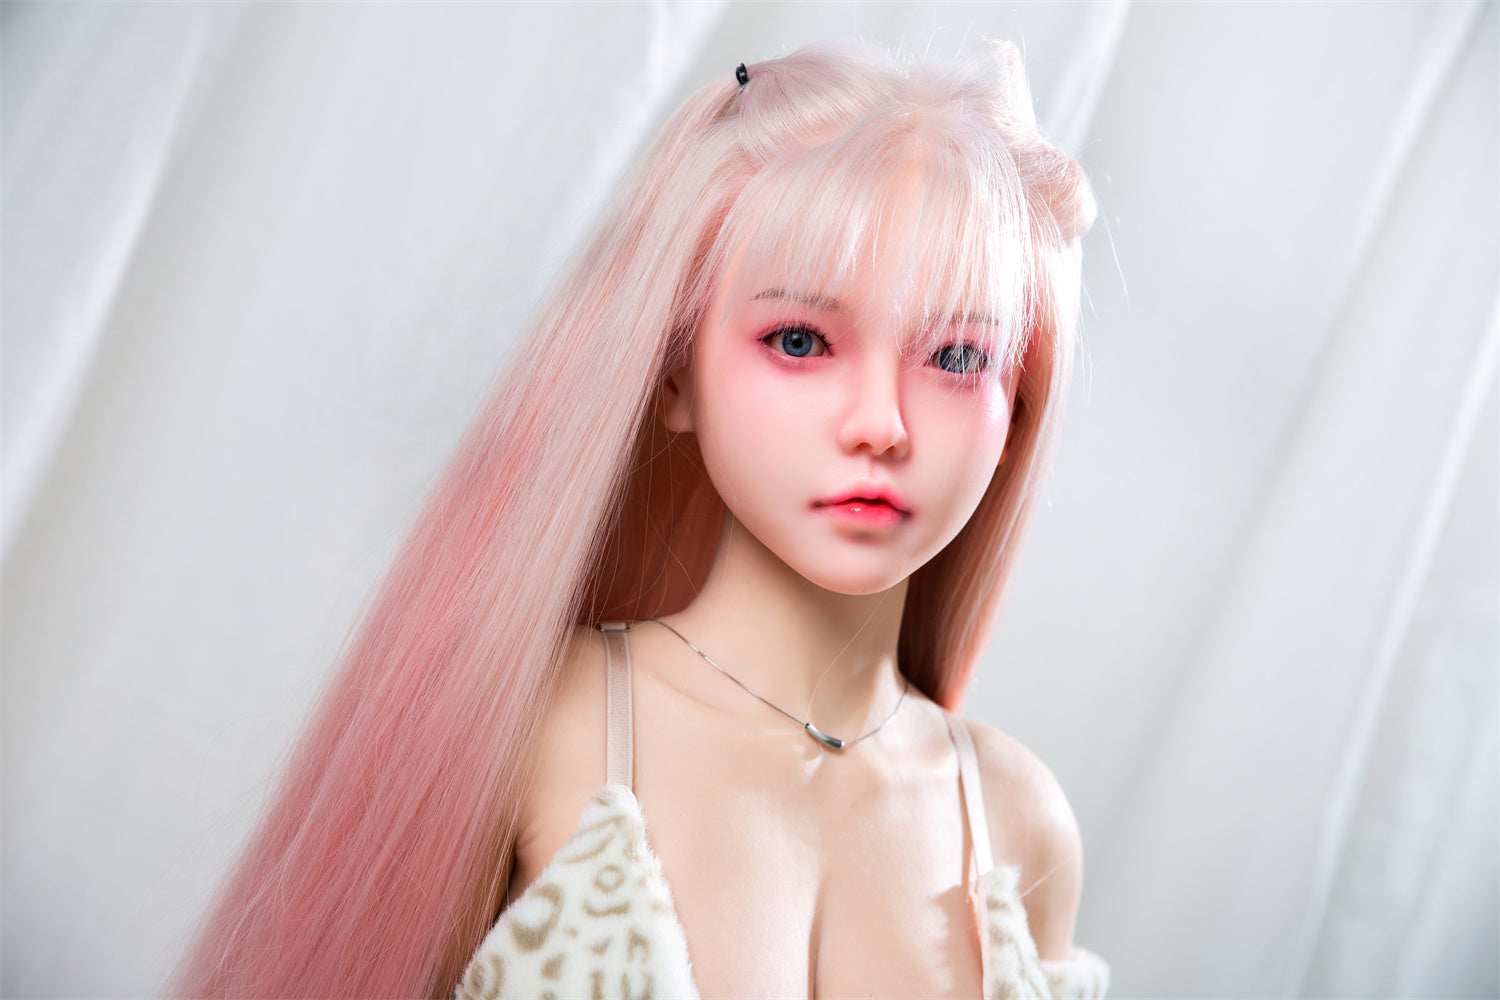 QITA Doll 162 cm Silicone - You Zhen | Buy Sex Dolls at DOLLS ACTUALLY